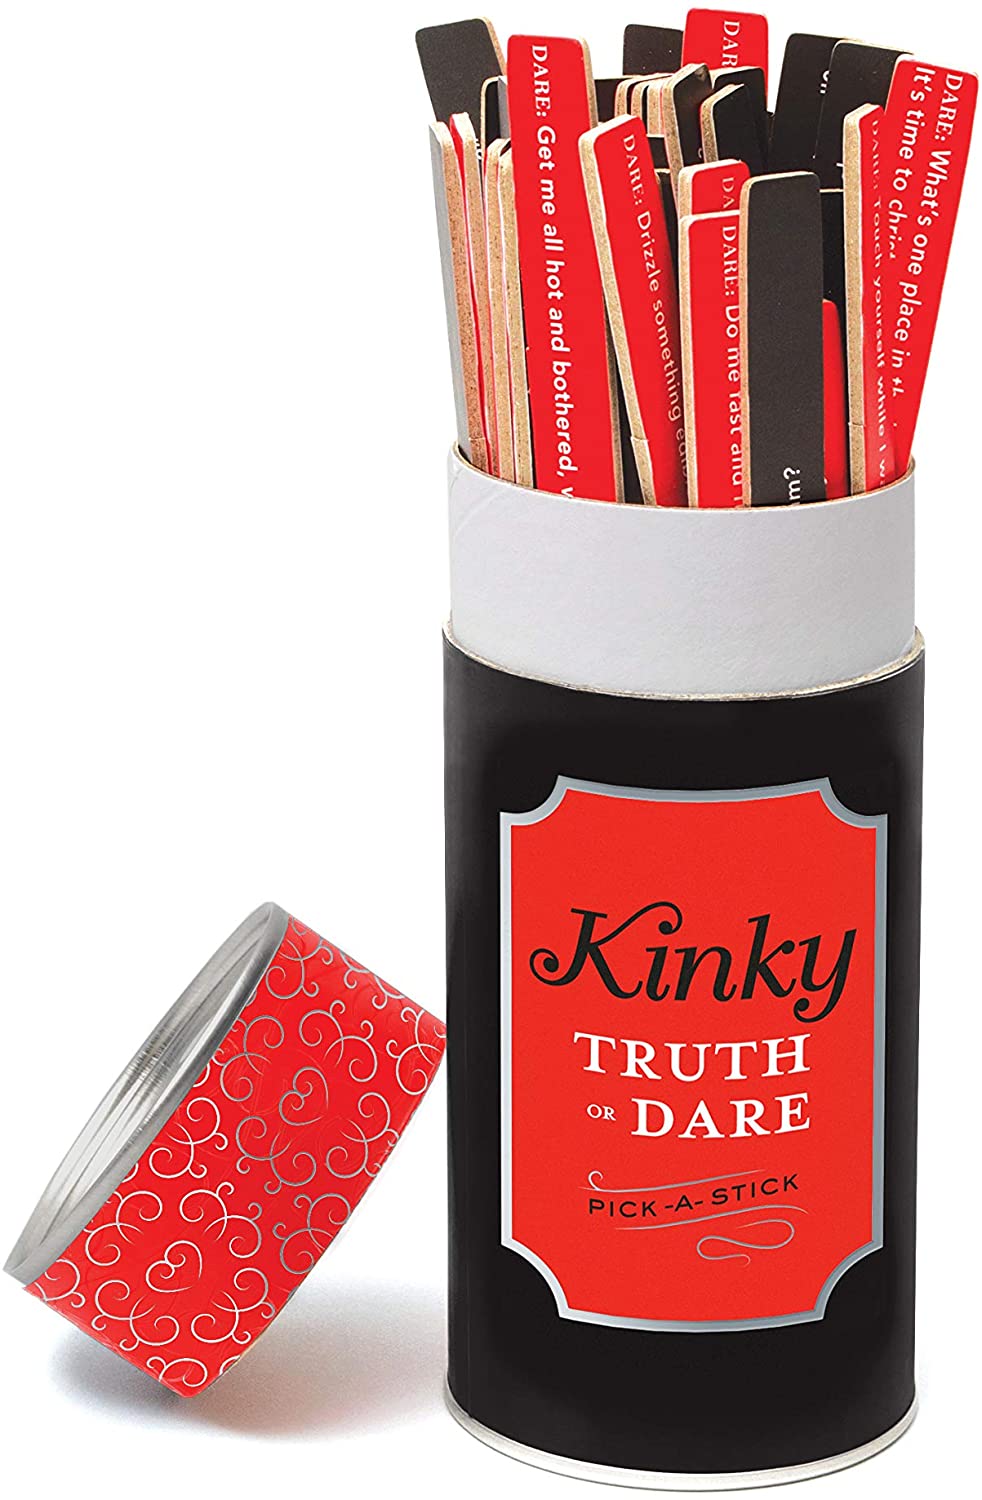 Kinky Truth or Dare: Pick-A-Stick. $10 @amazon.com